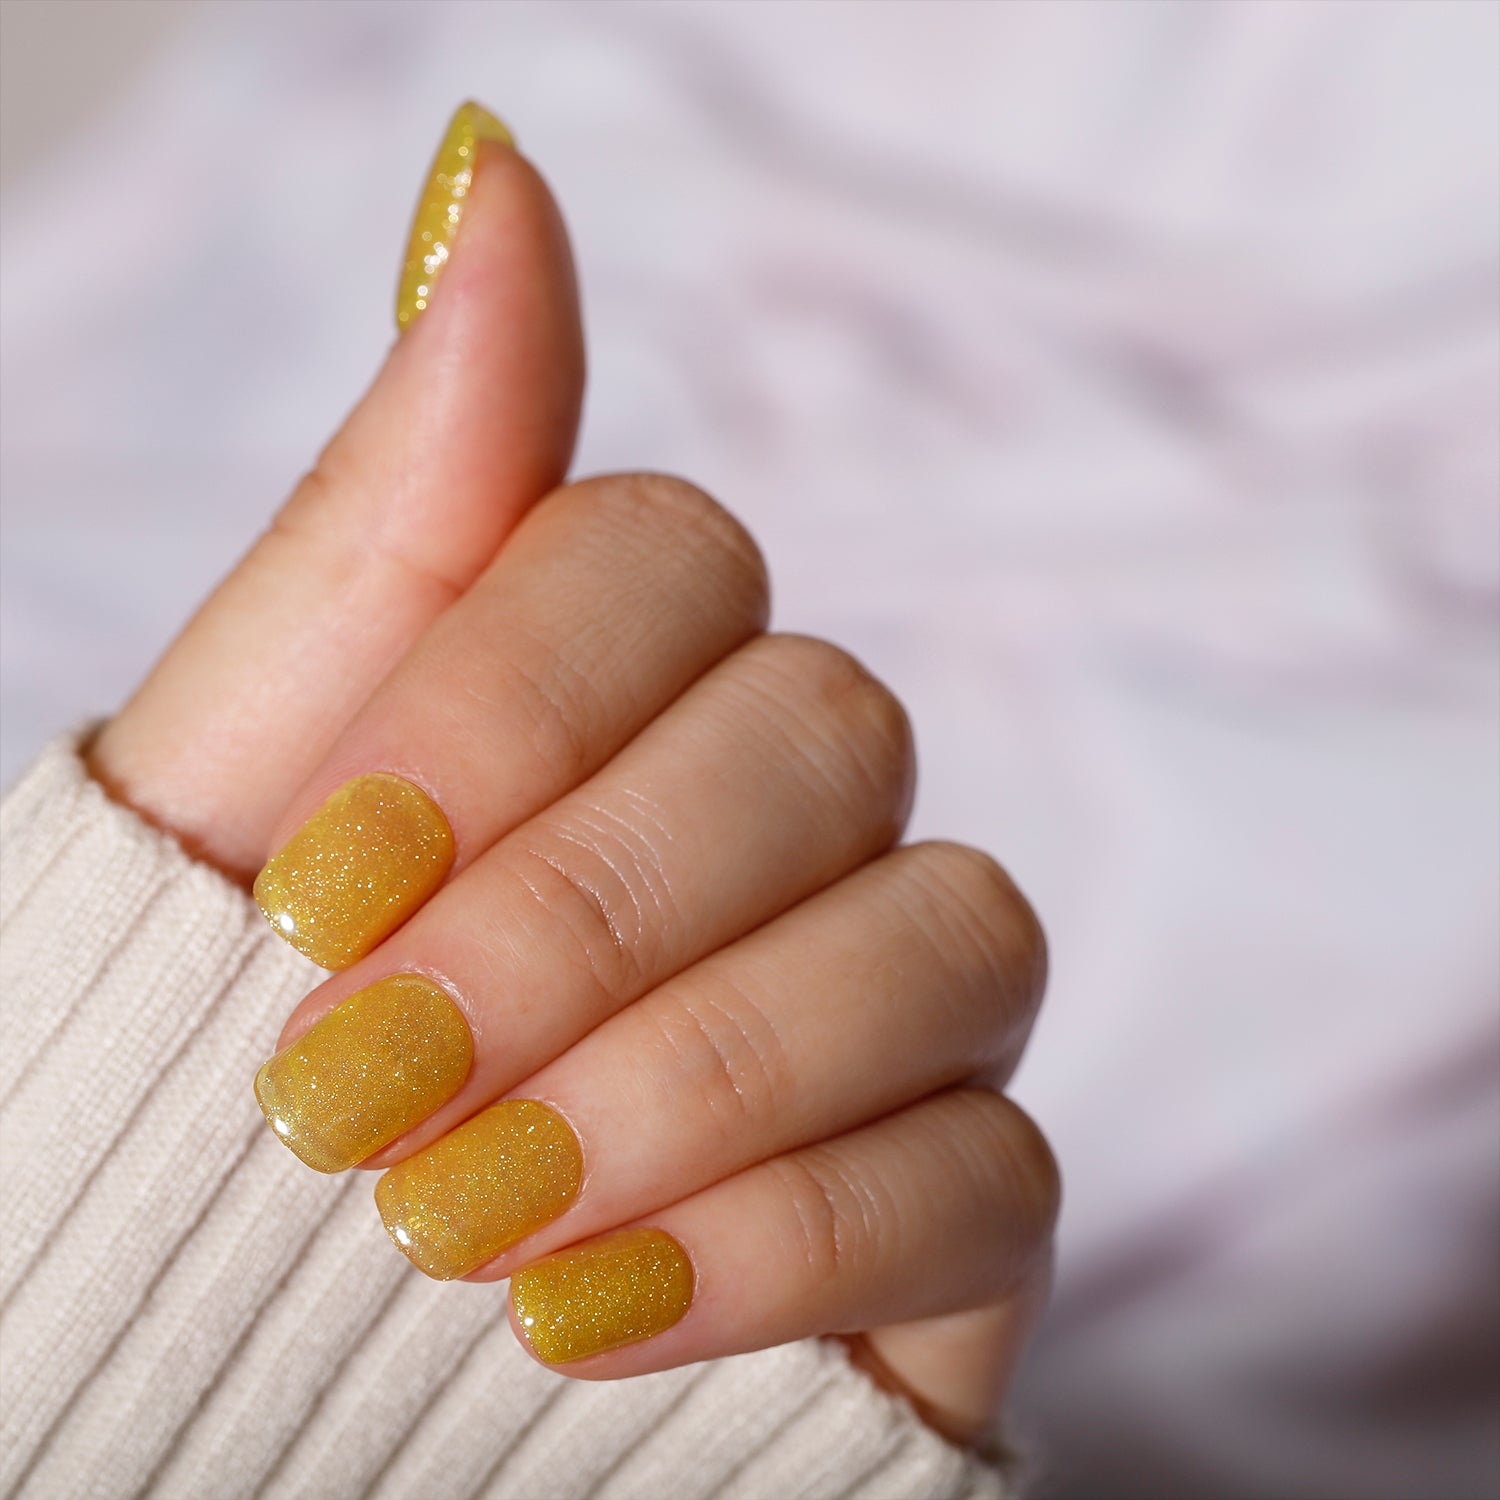 How to make yellow nail polish - Quora